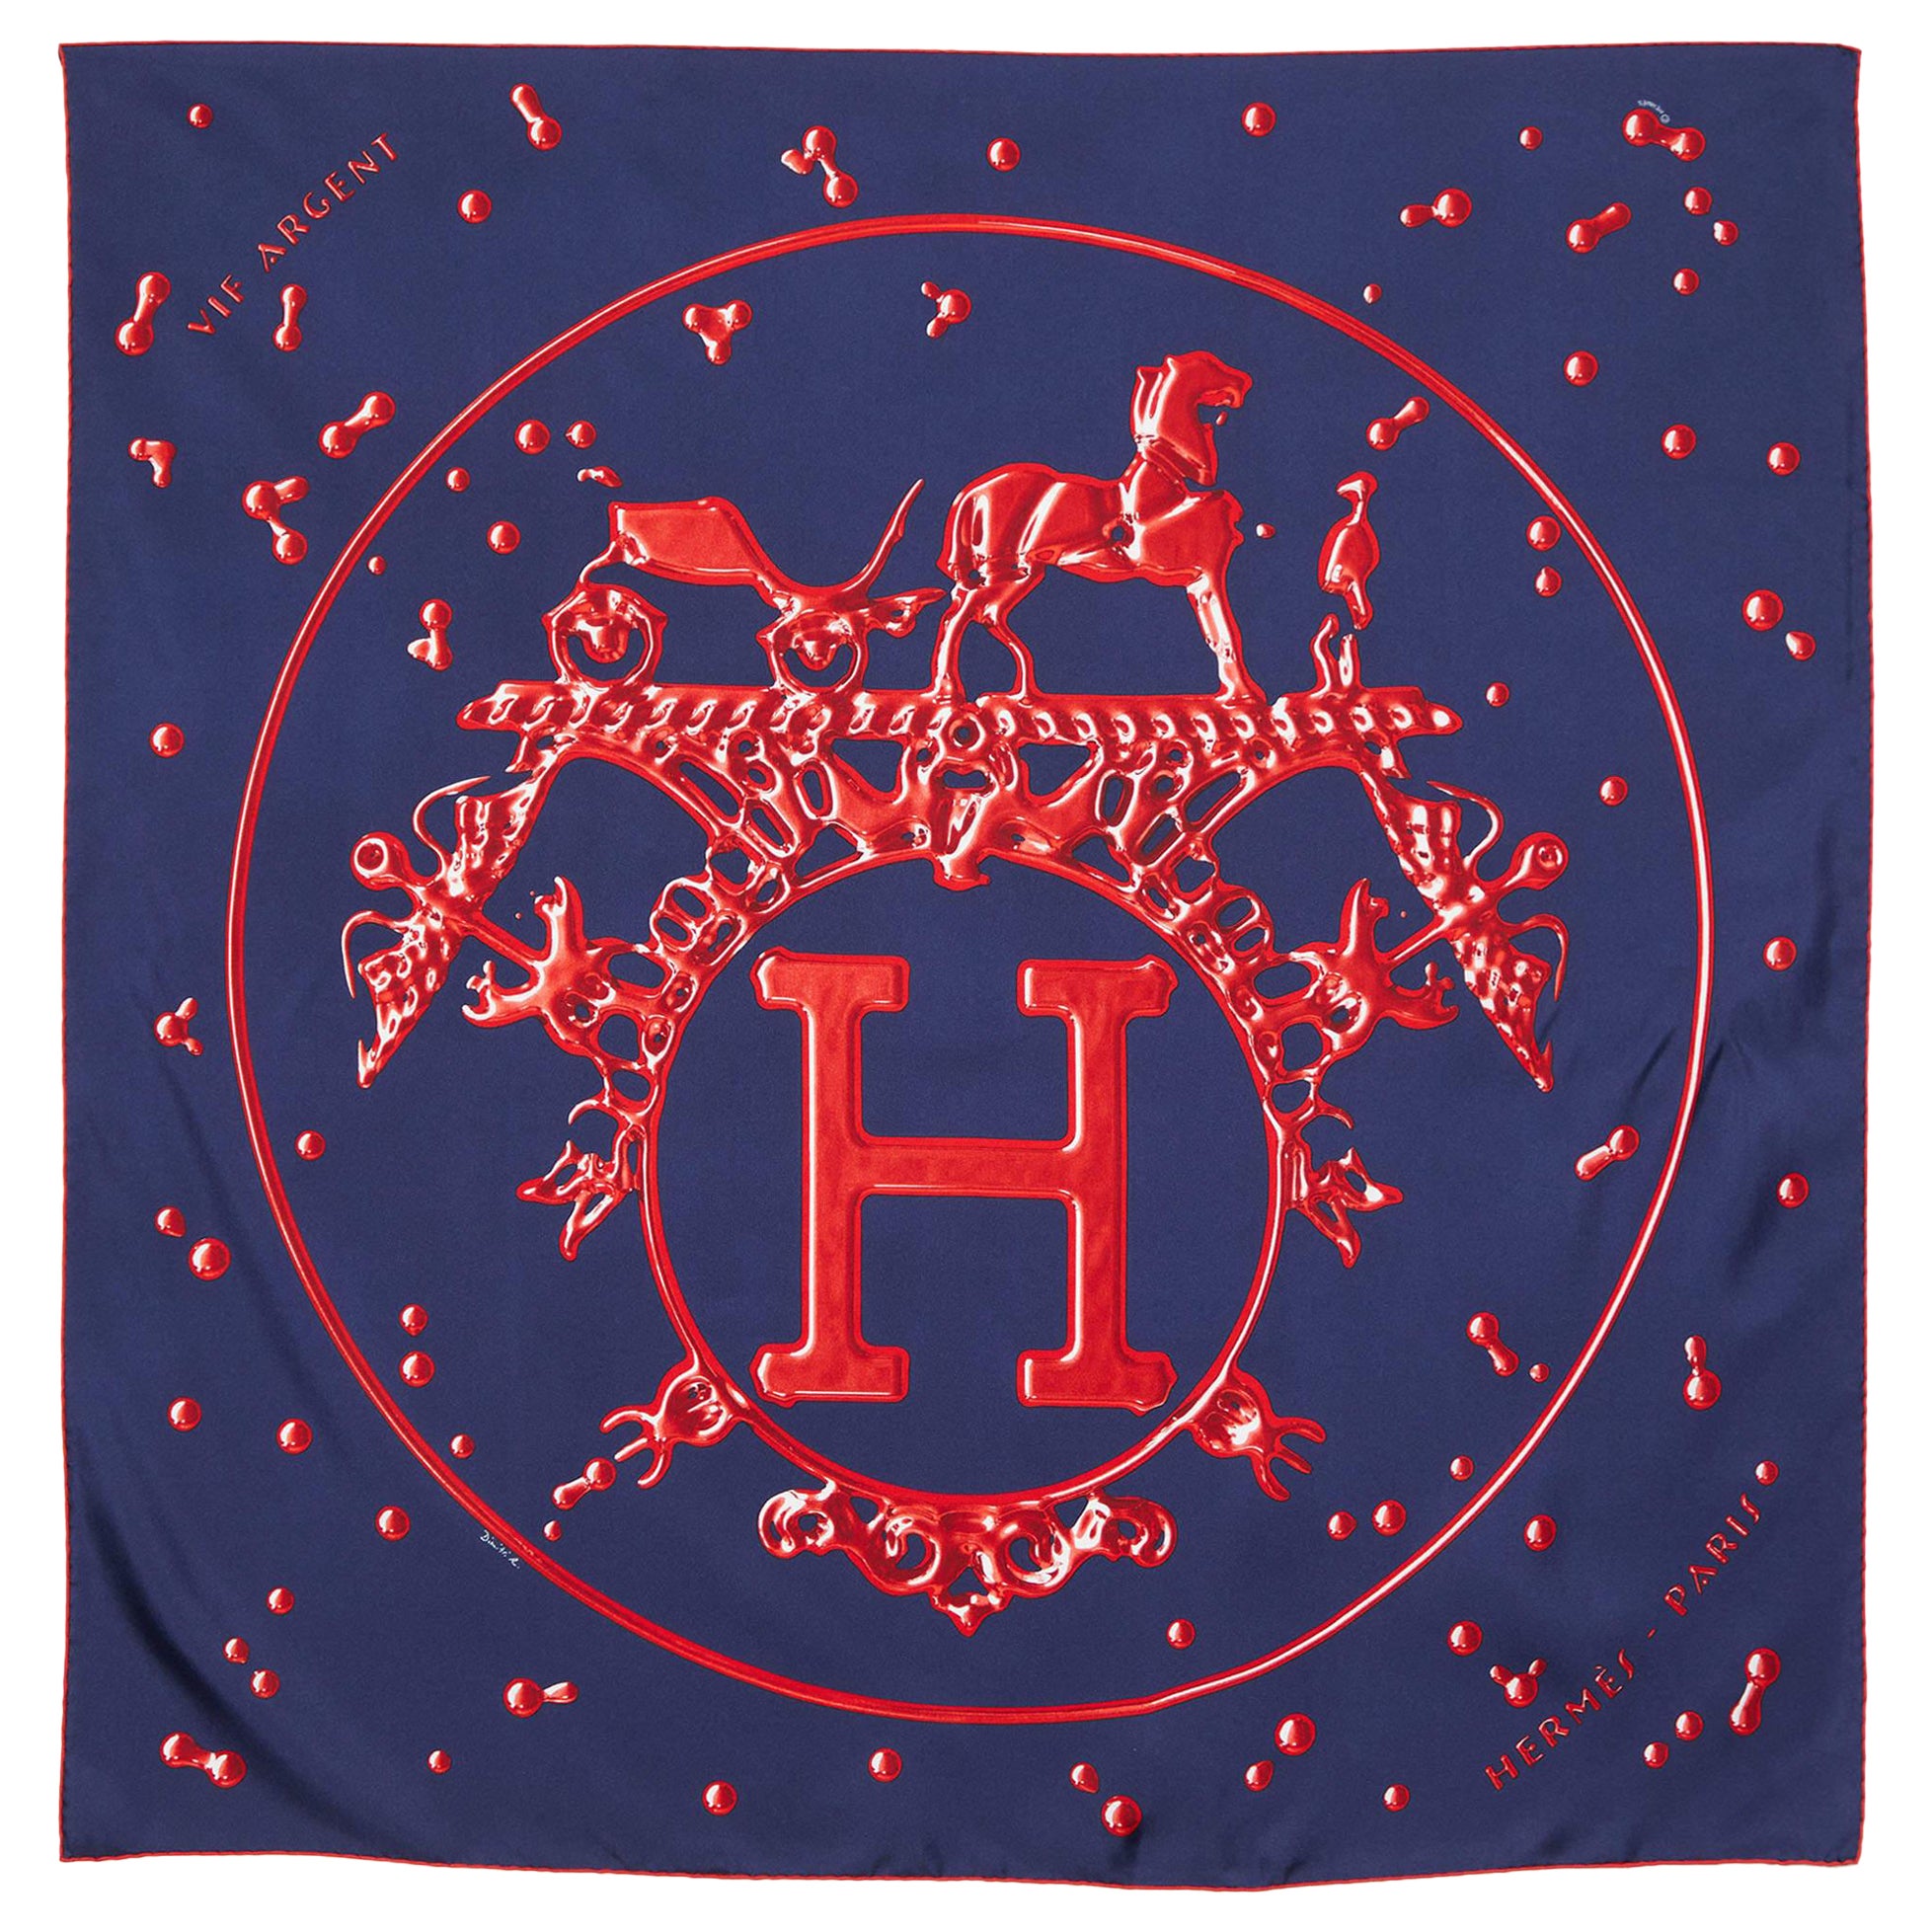 Hermes Navy Blue Vif Argent Printed Silk Square Scarf